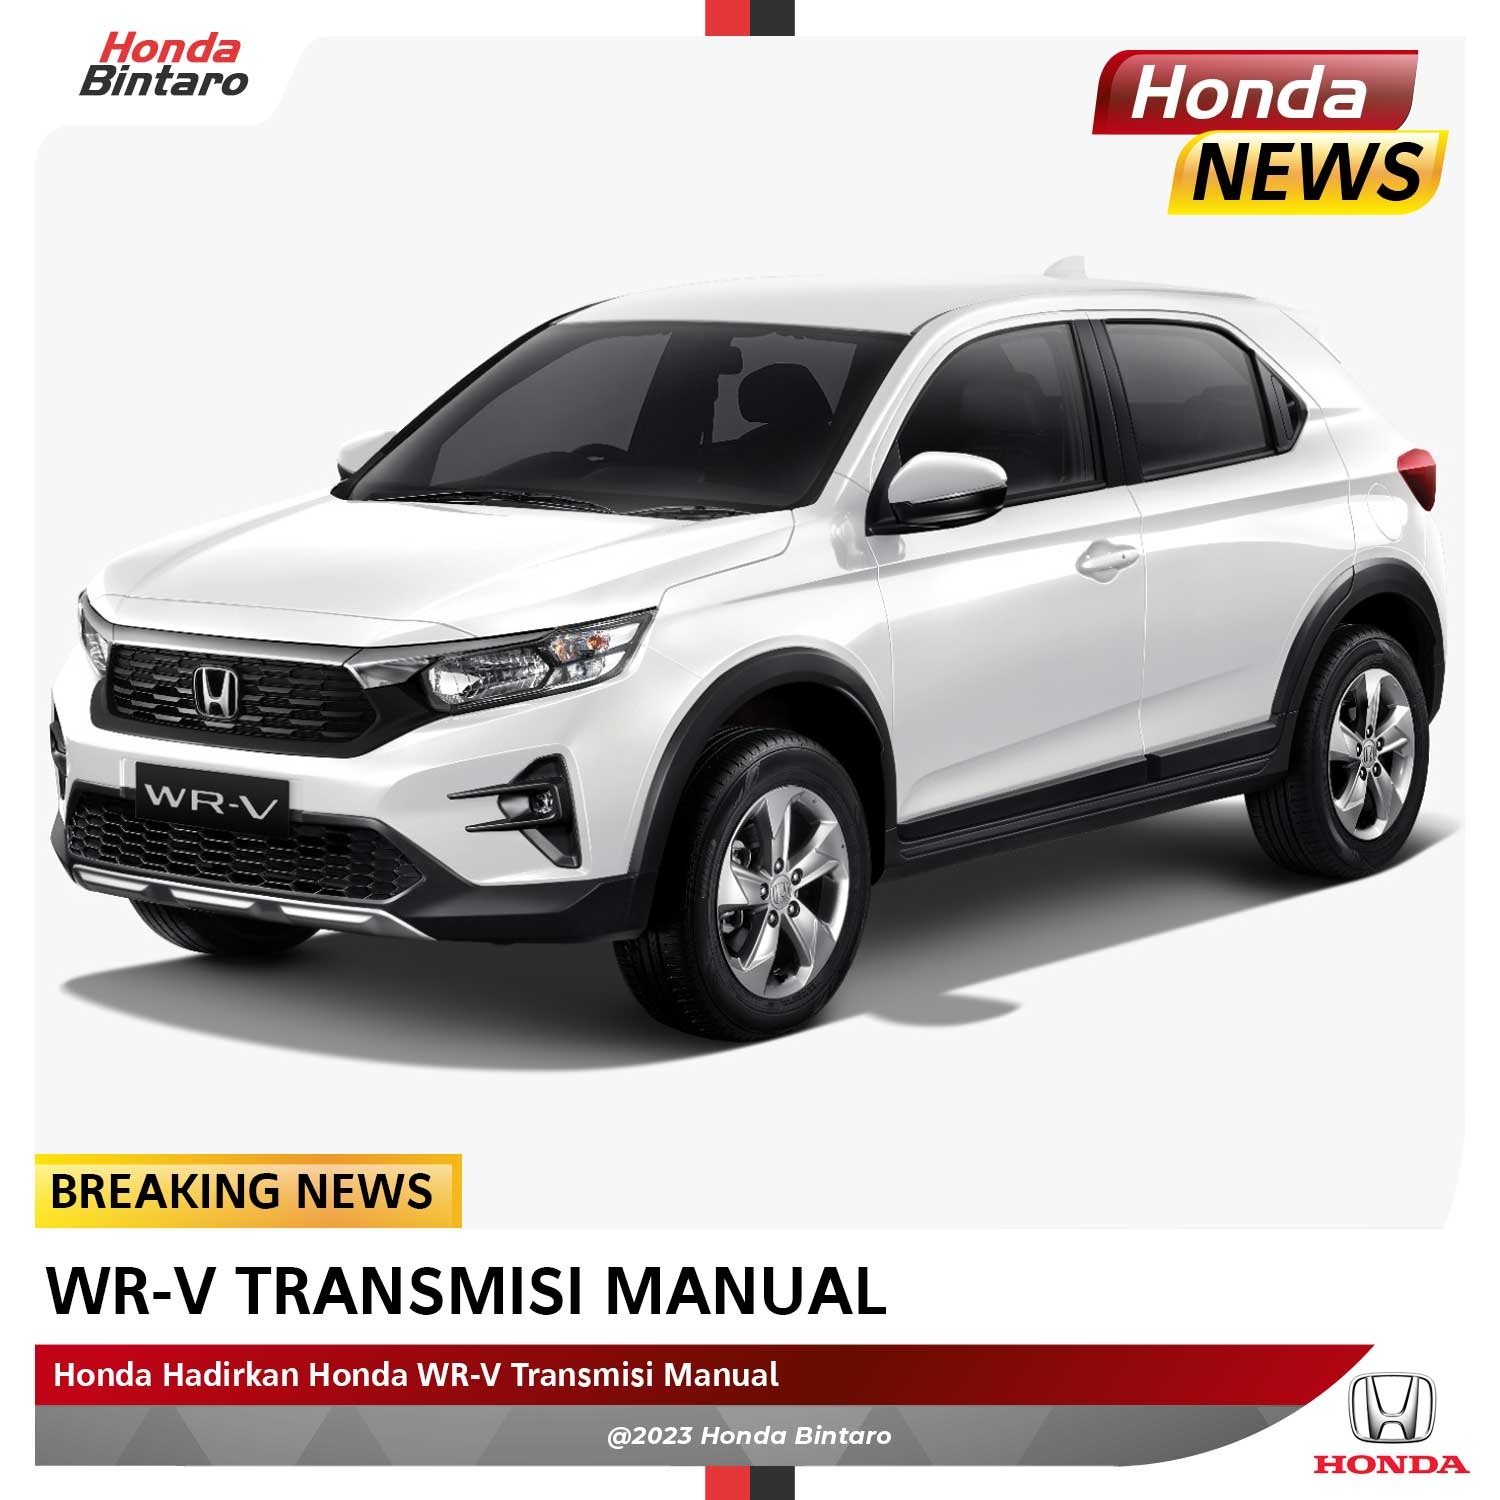 Honda Hadirkan Honda WR-V Transmisi Manual